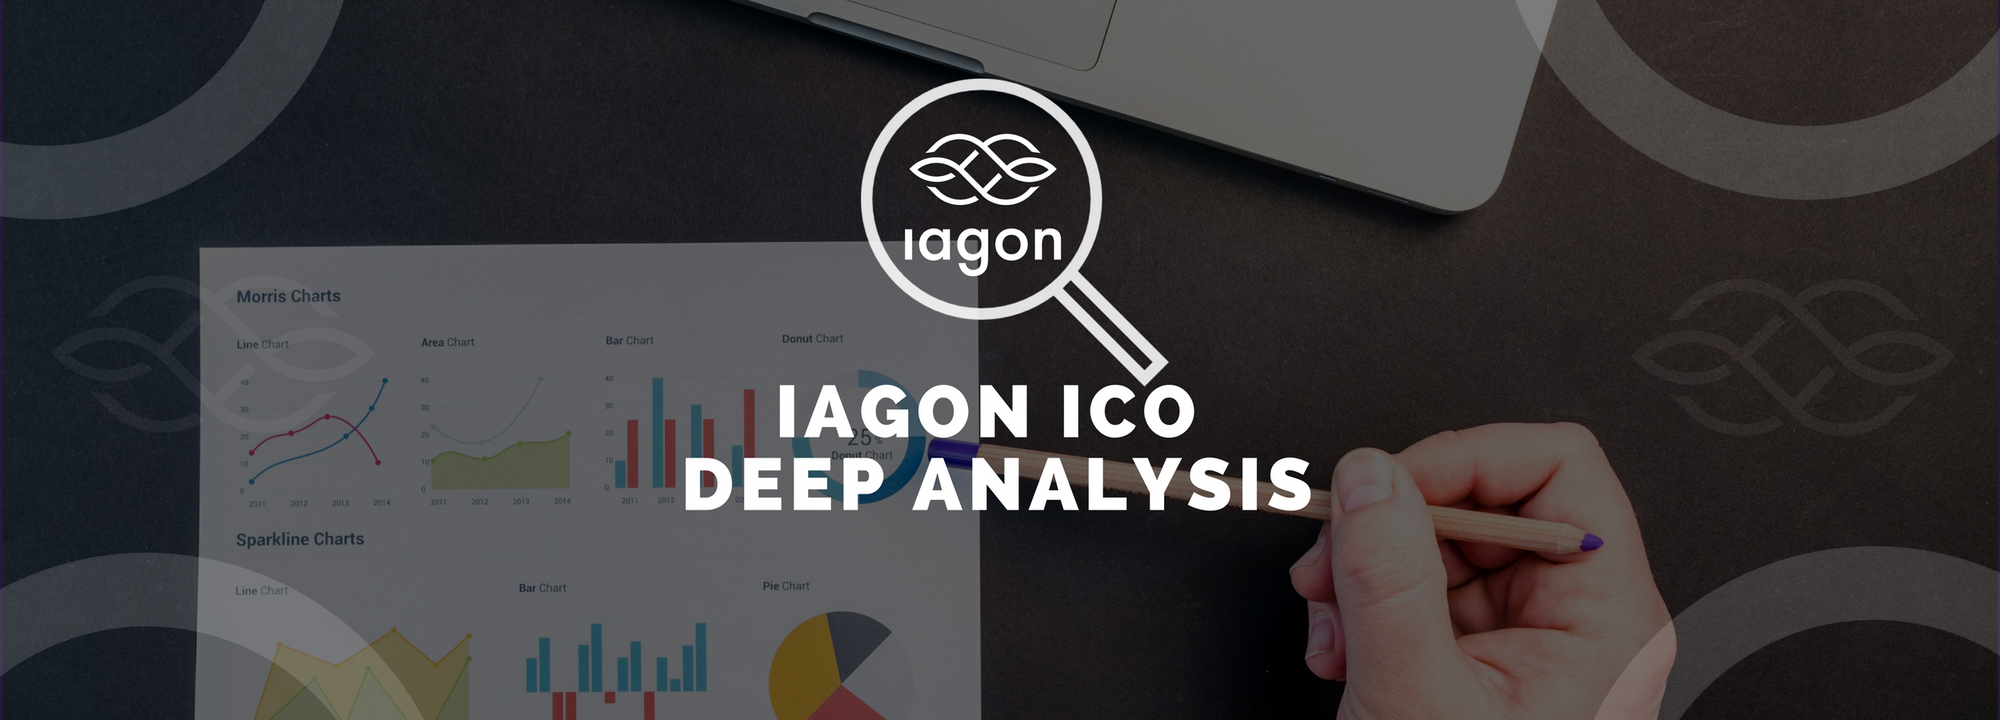 Iagon ICO Deep Analysis from Rocket Fuel Capital